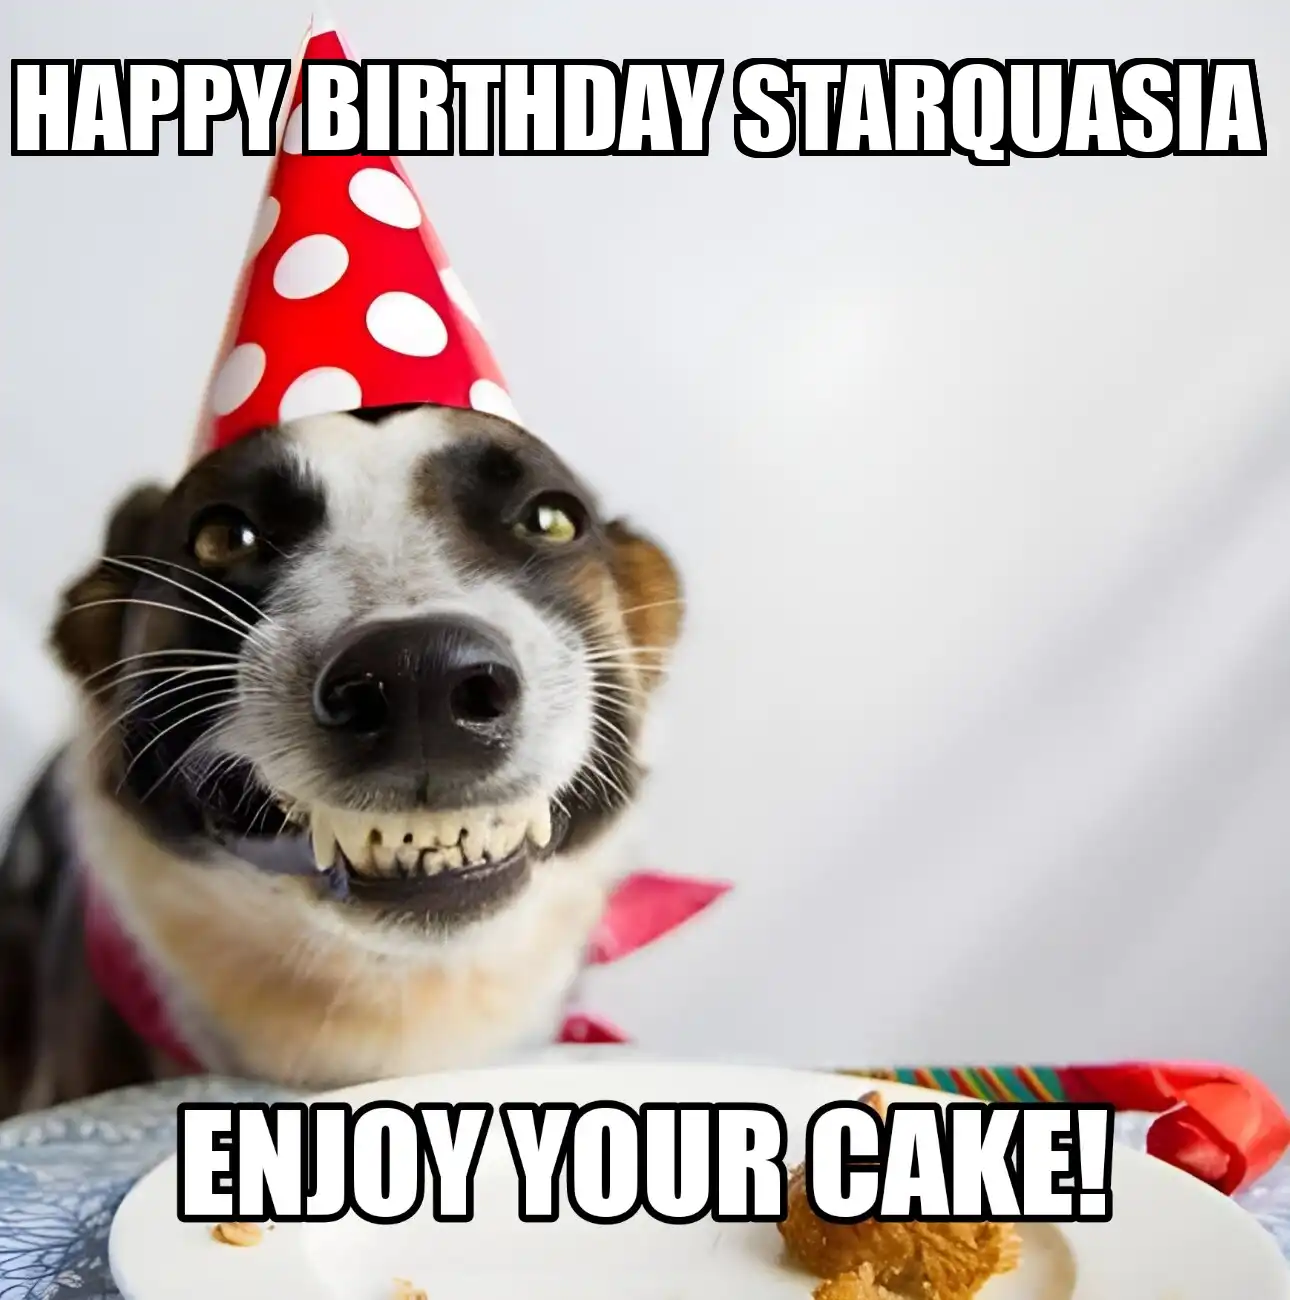 Happy Birthday Starquasia Enjoy Your Cake Dog Meme